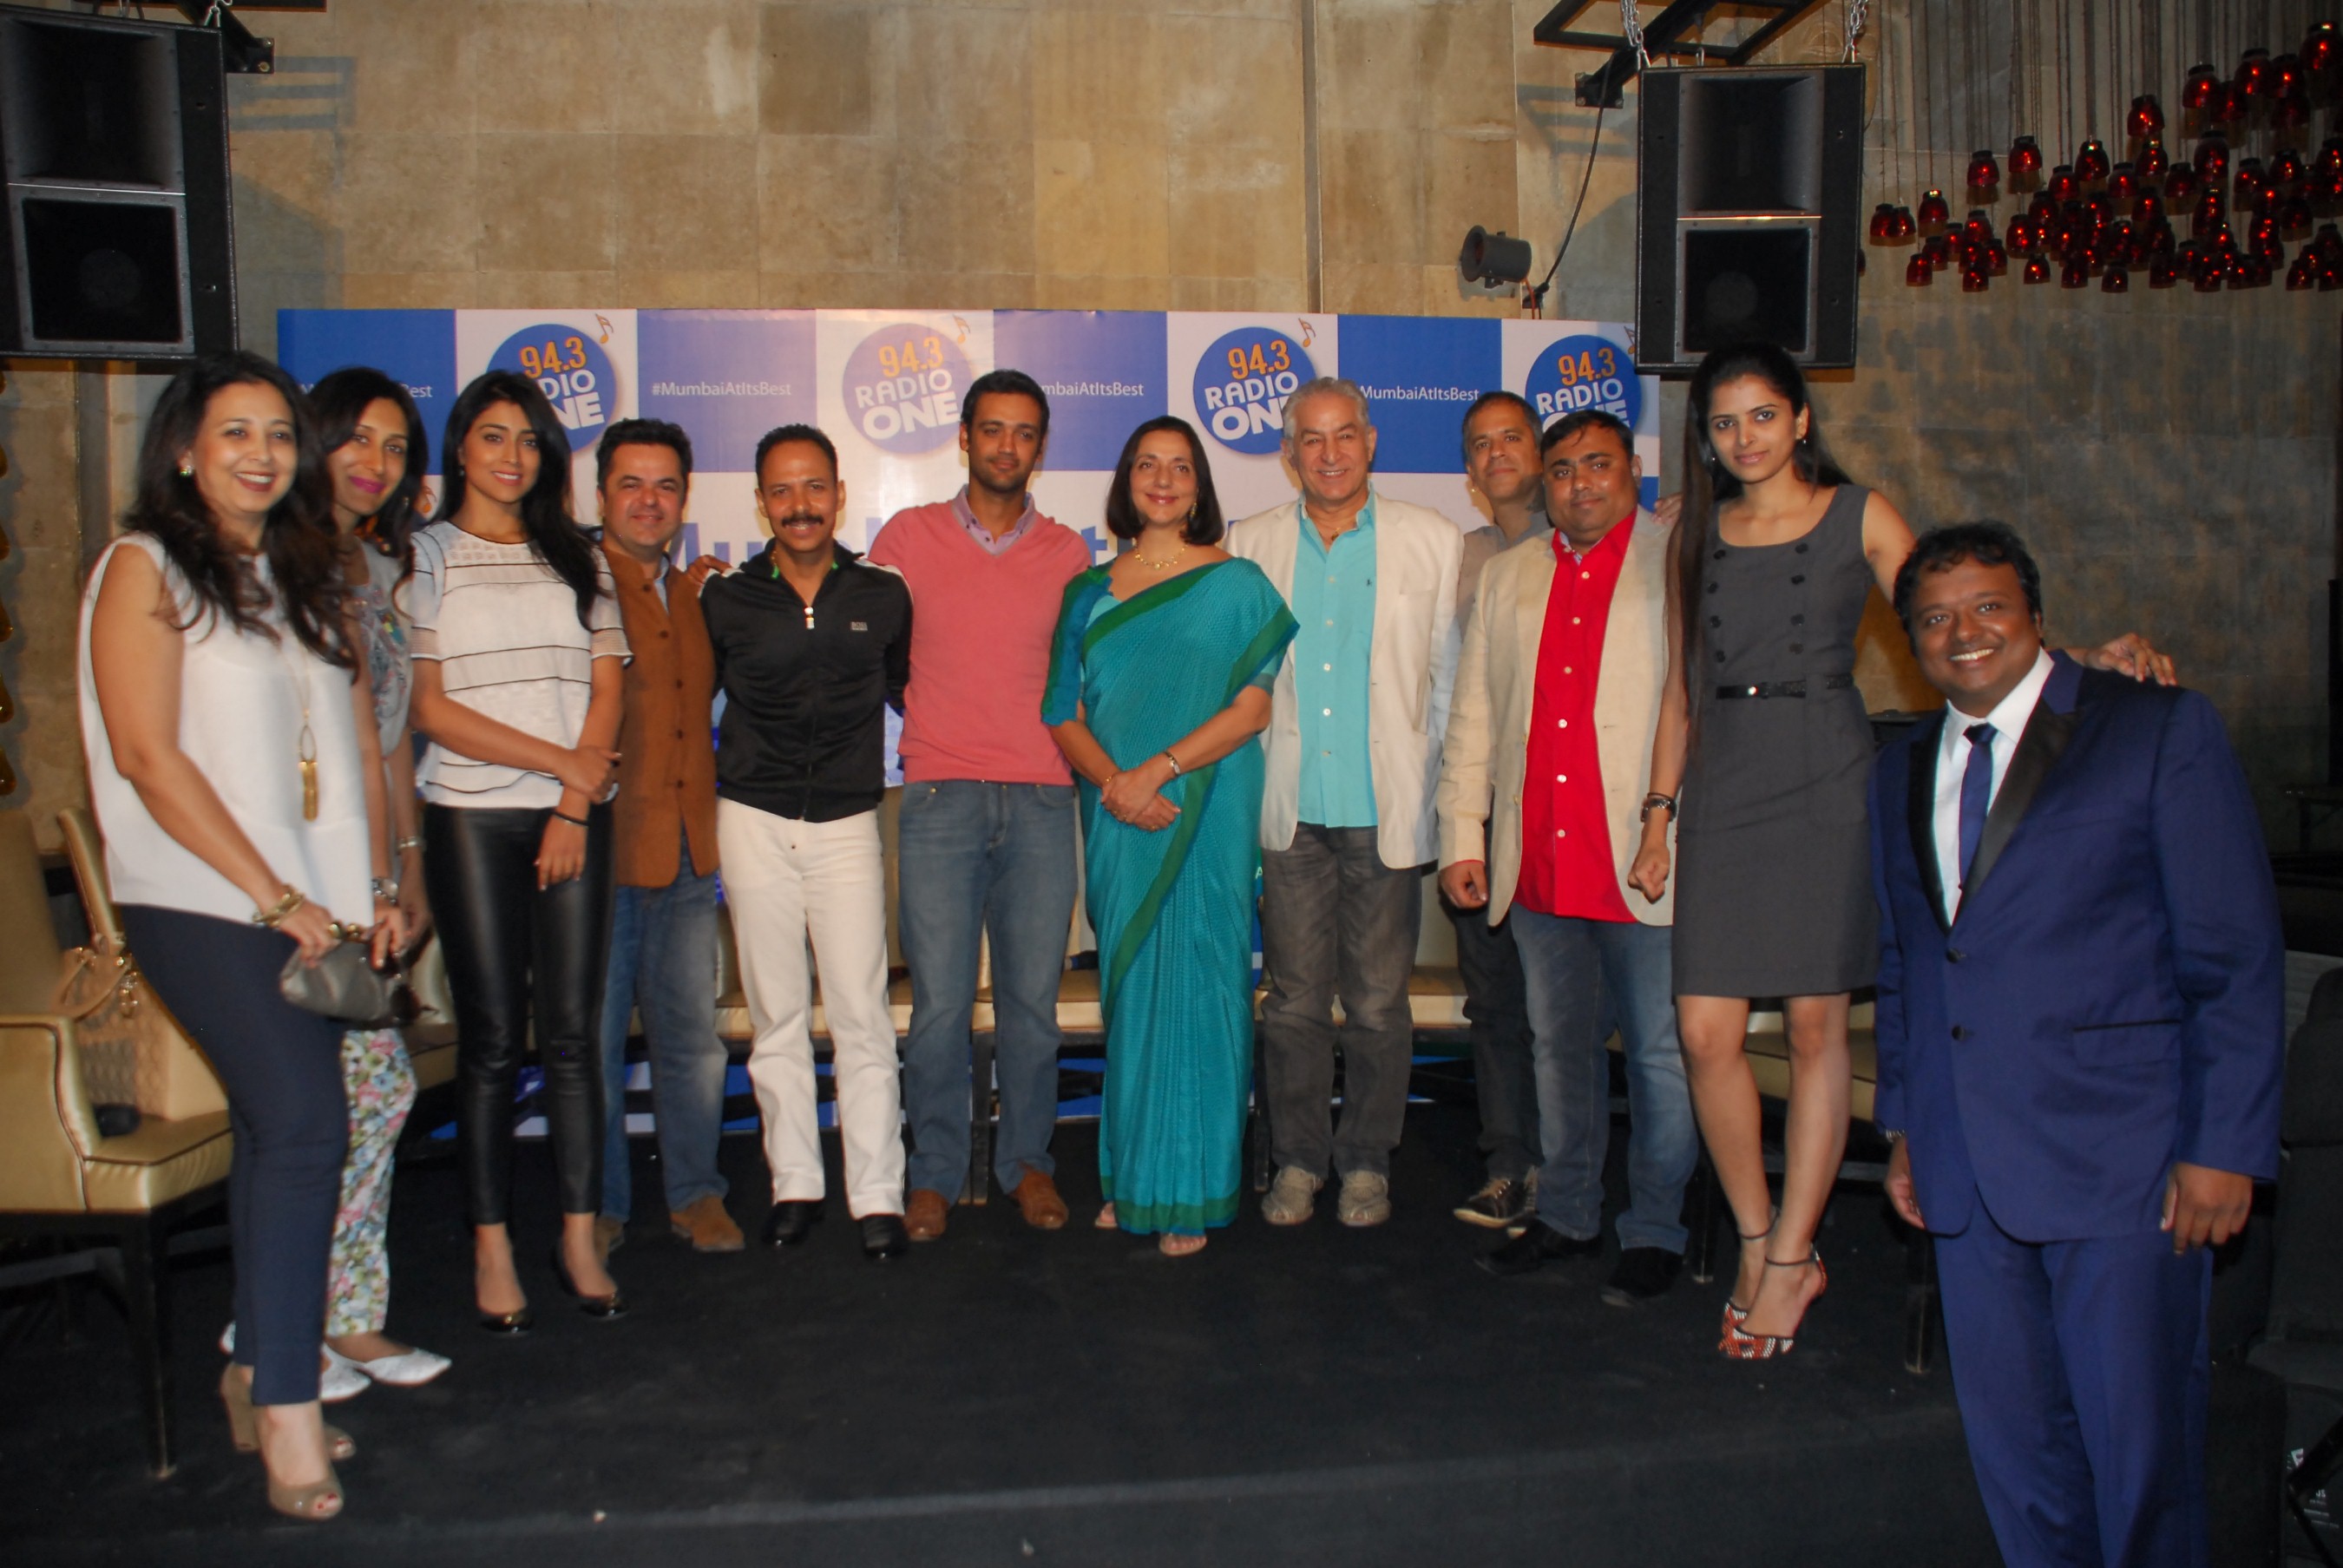 Stars at Radio One CSR initiative Mumbai at Its Best Event